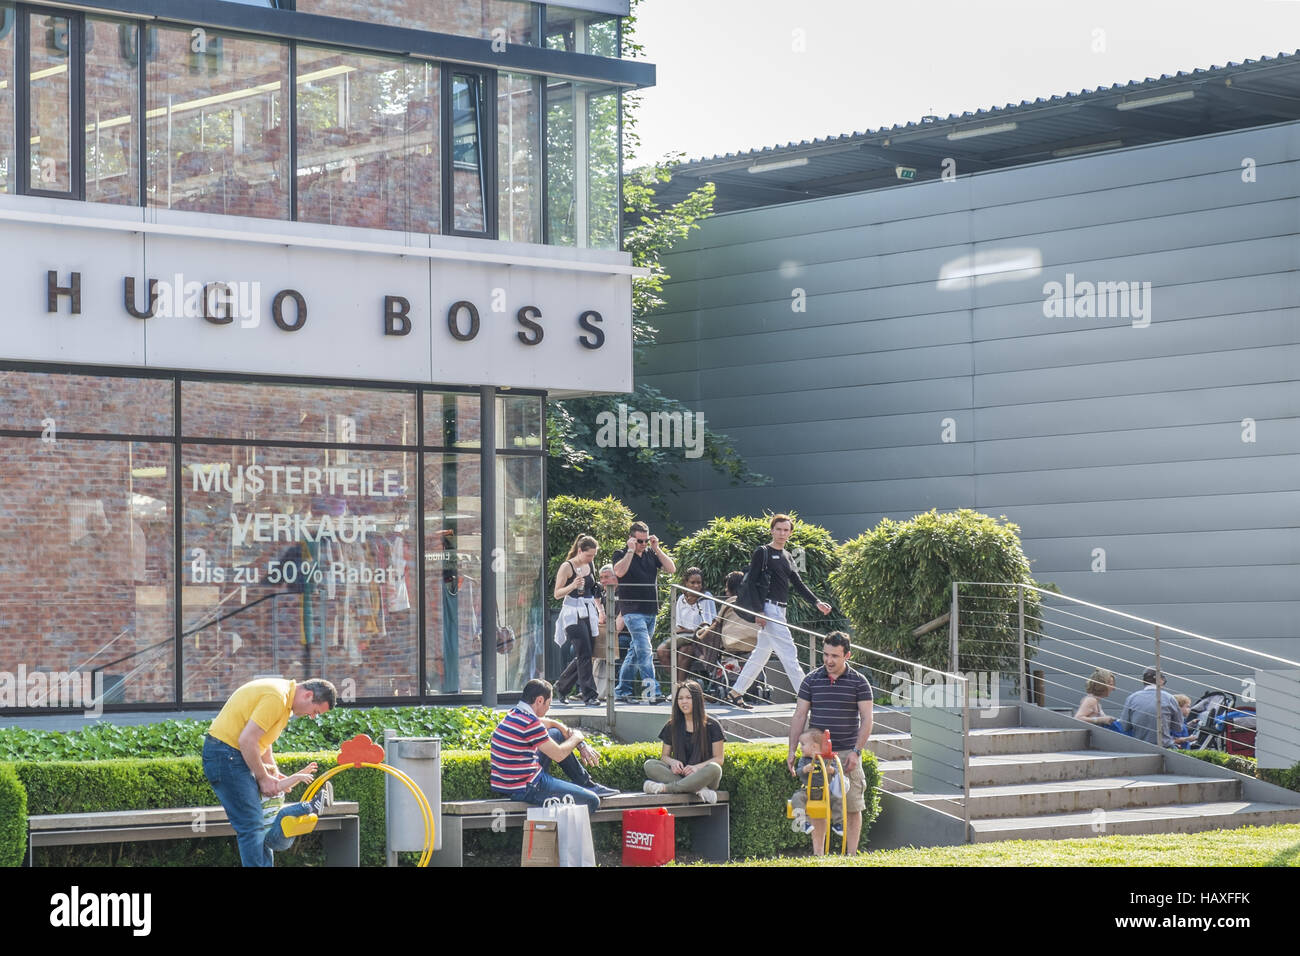 Hugo Boss, Sample Sale outlet Stockfotografie - Alamy